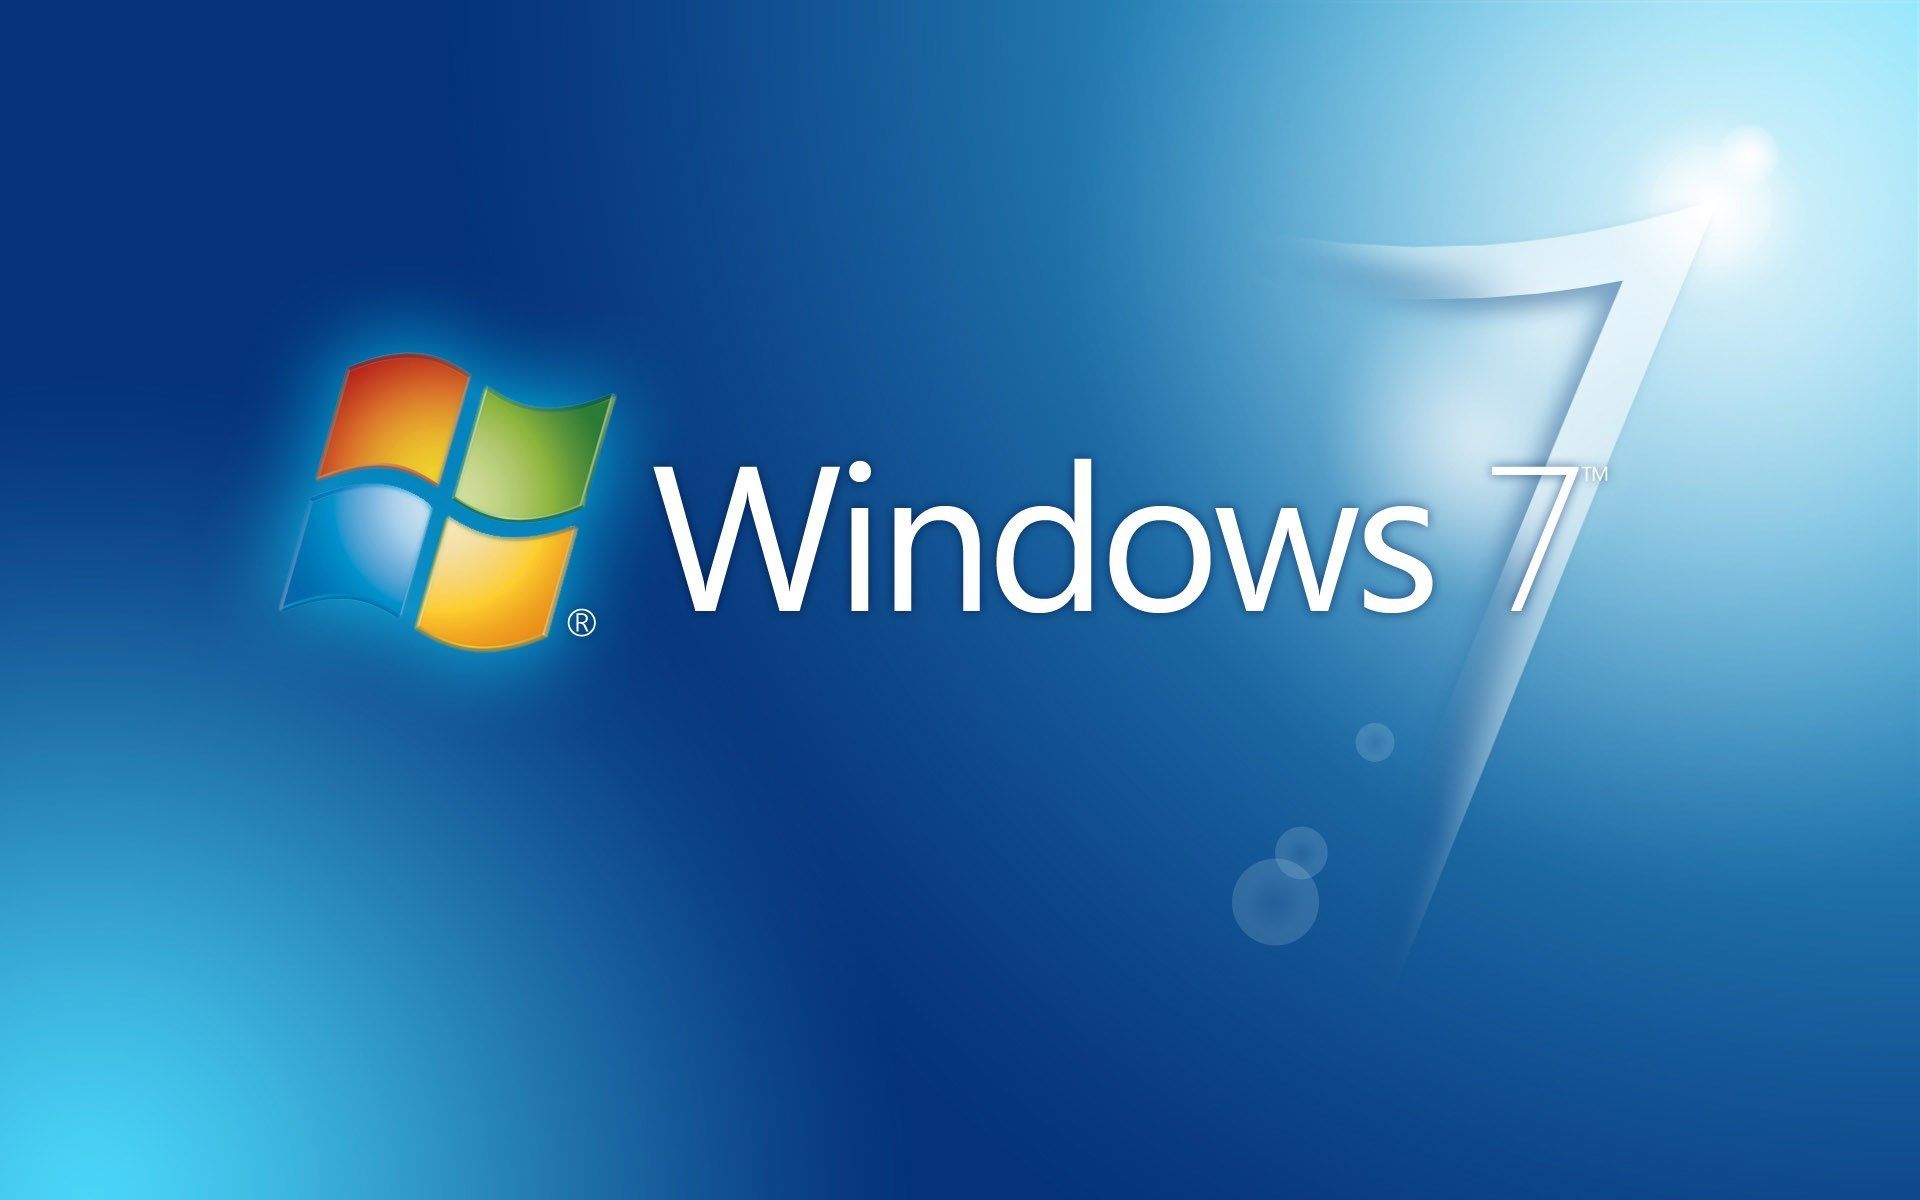 windows for desktops 19201200 4K. Windows, Samsung wallpaper, Live wallpaper